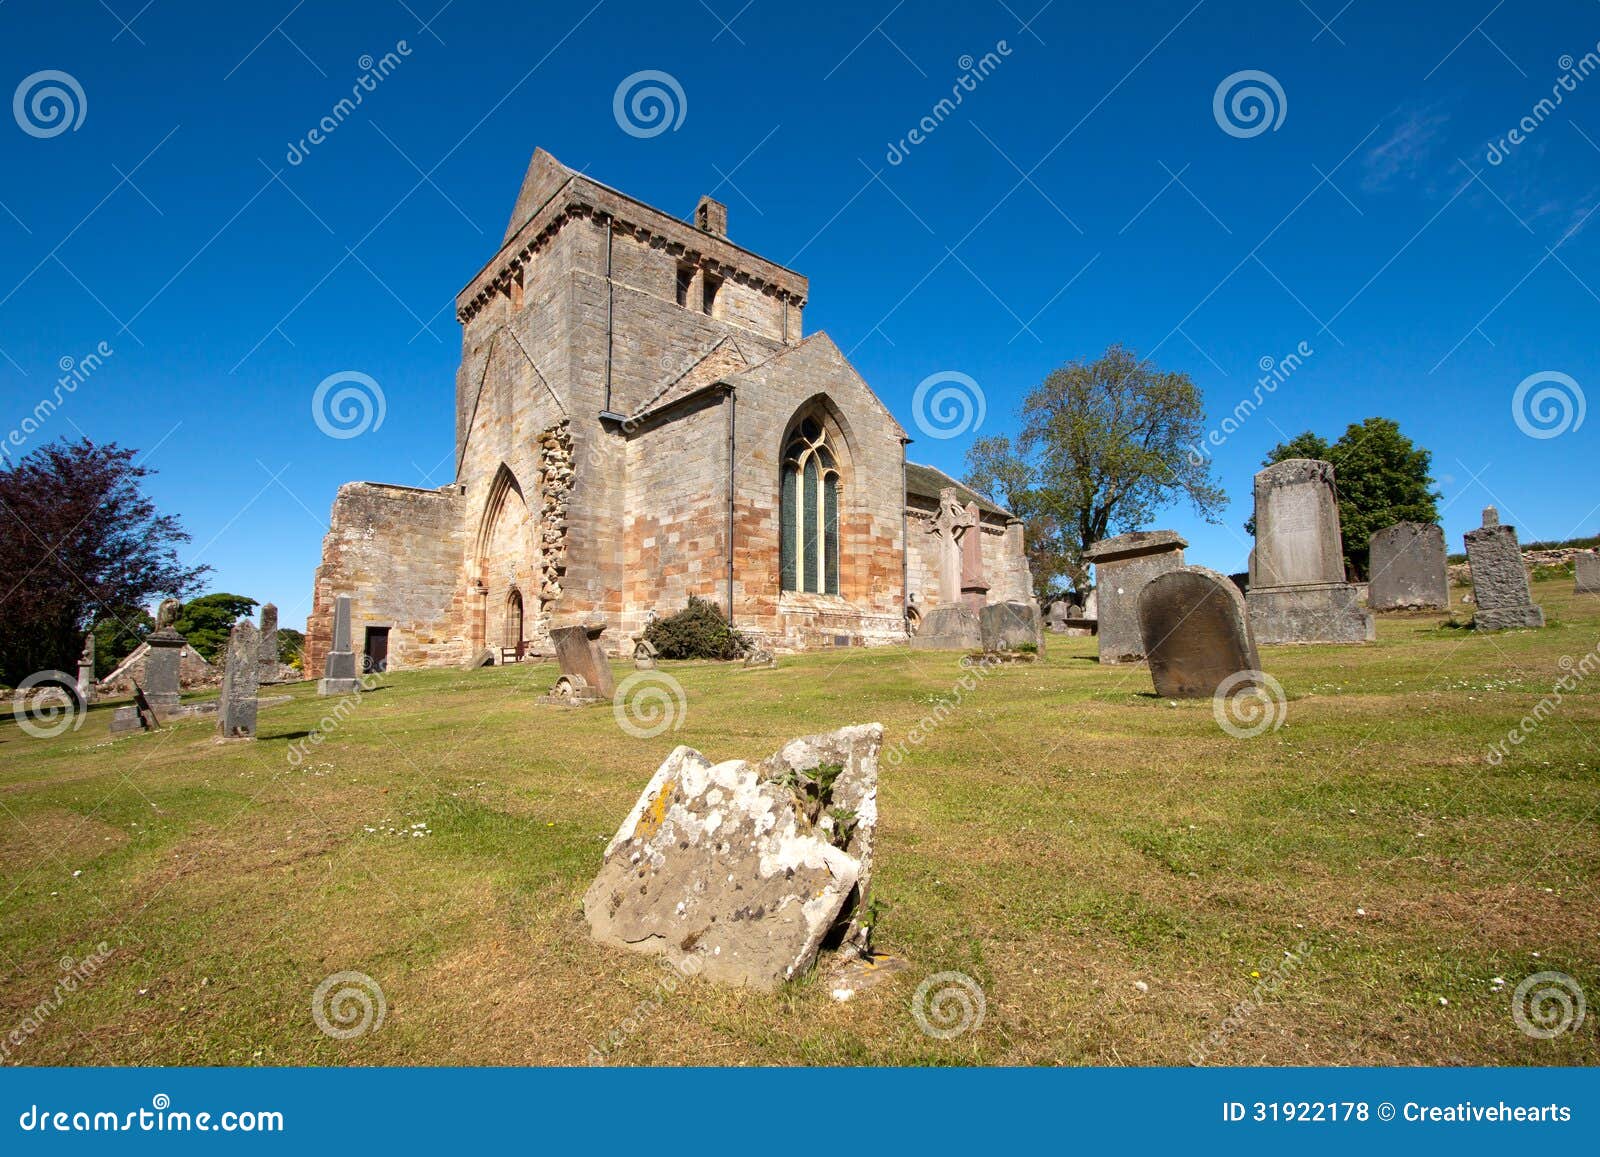 crichton collegiate church, edinburgh, scotland